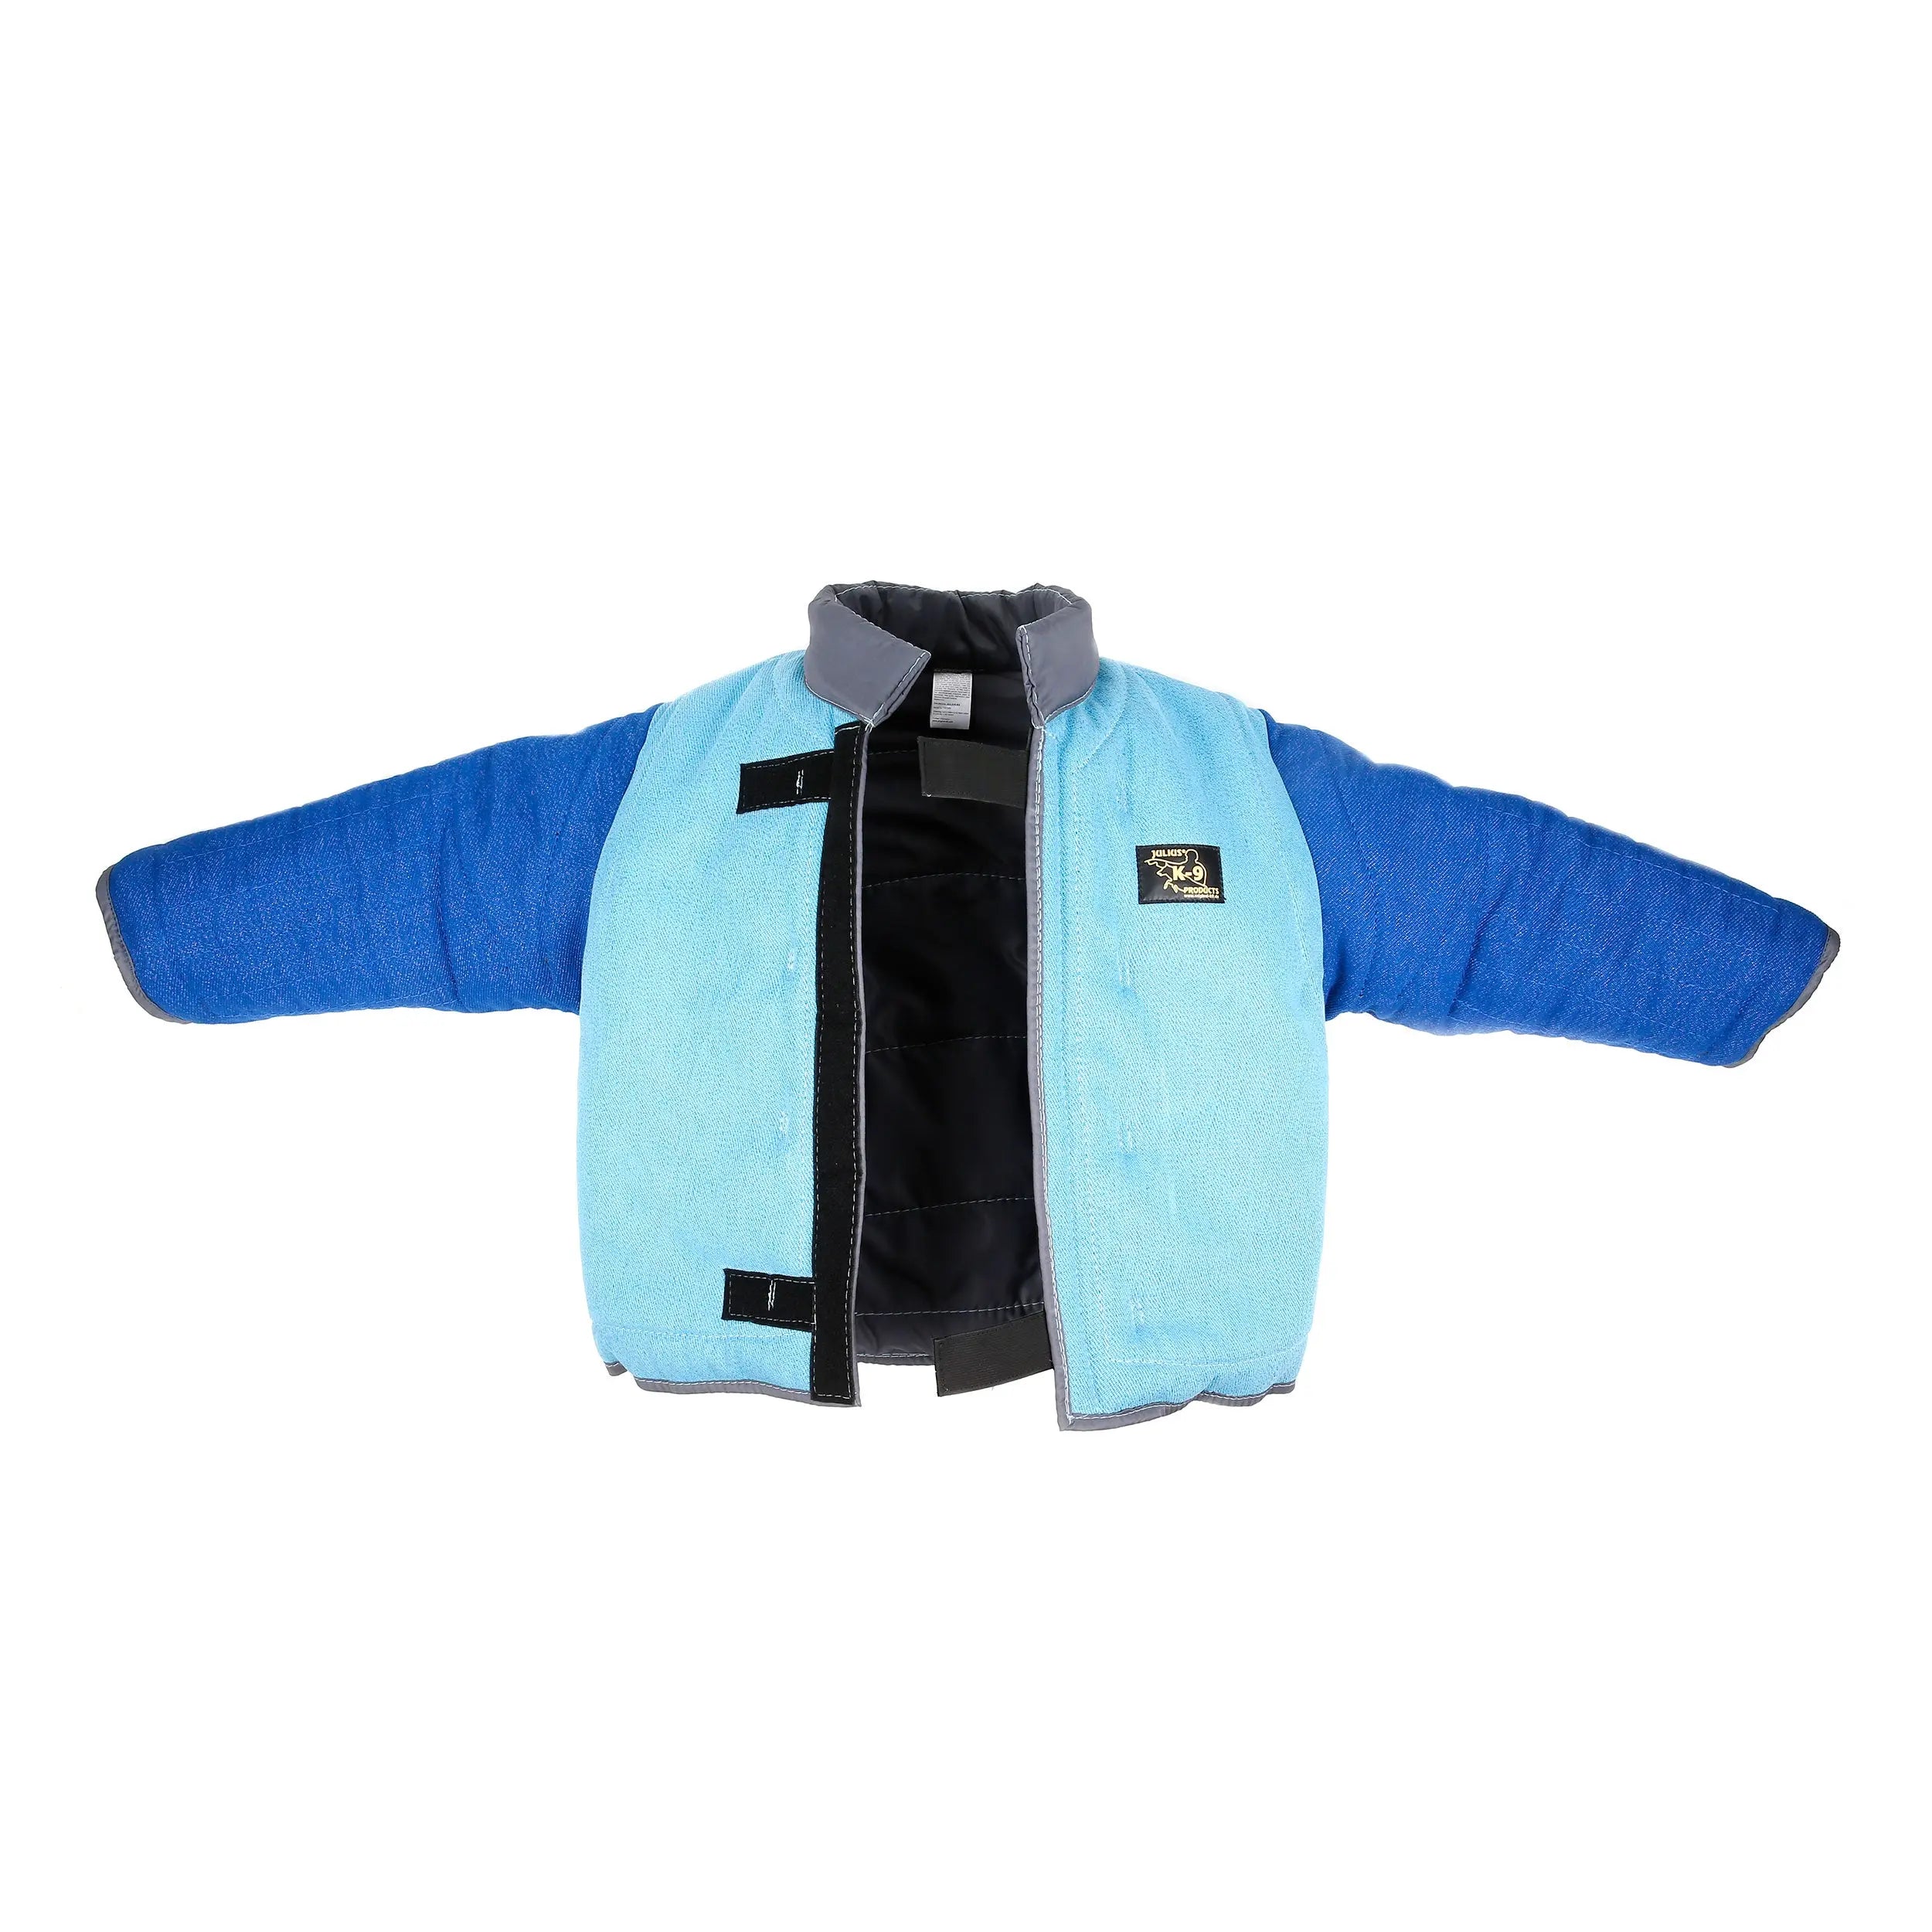 Full Protection Bite Suit Jacket with Kevlar - Julius-K9 LLC